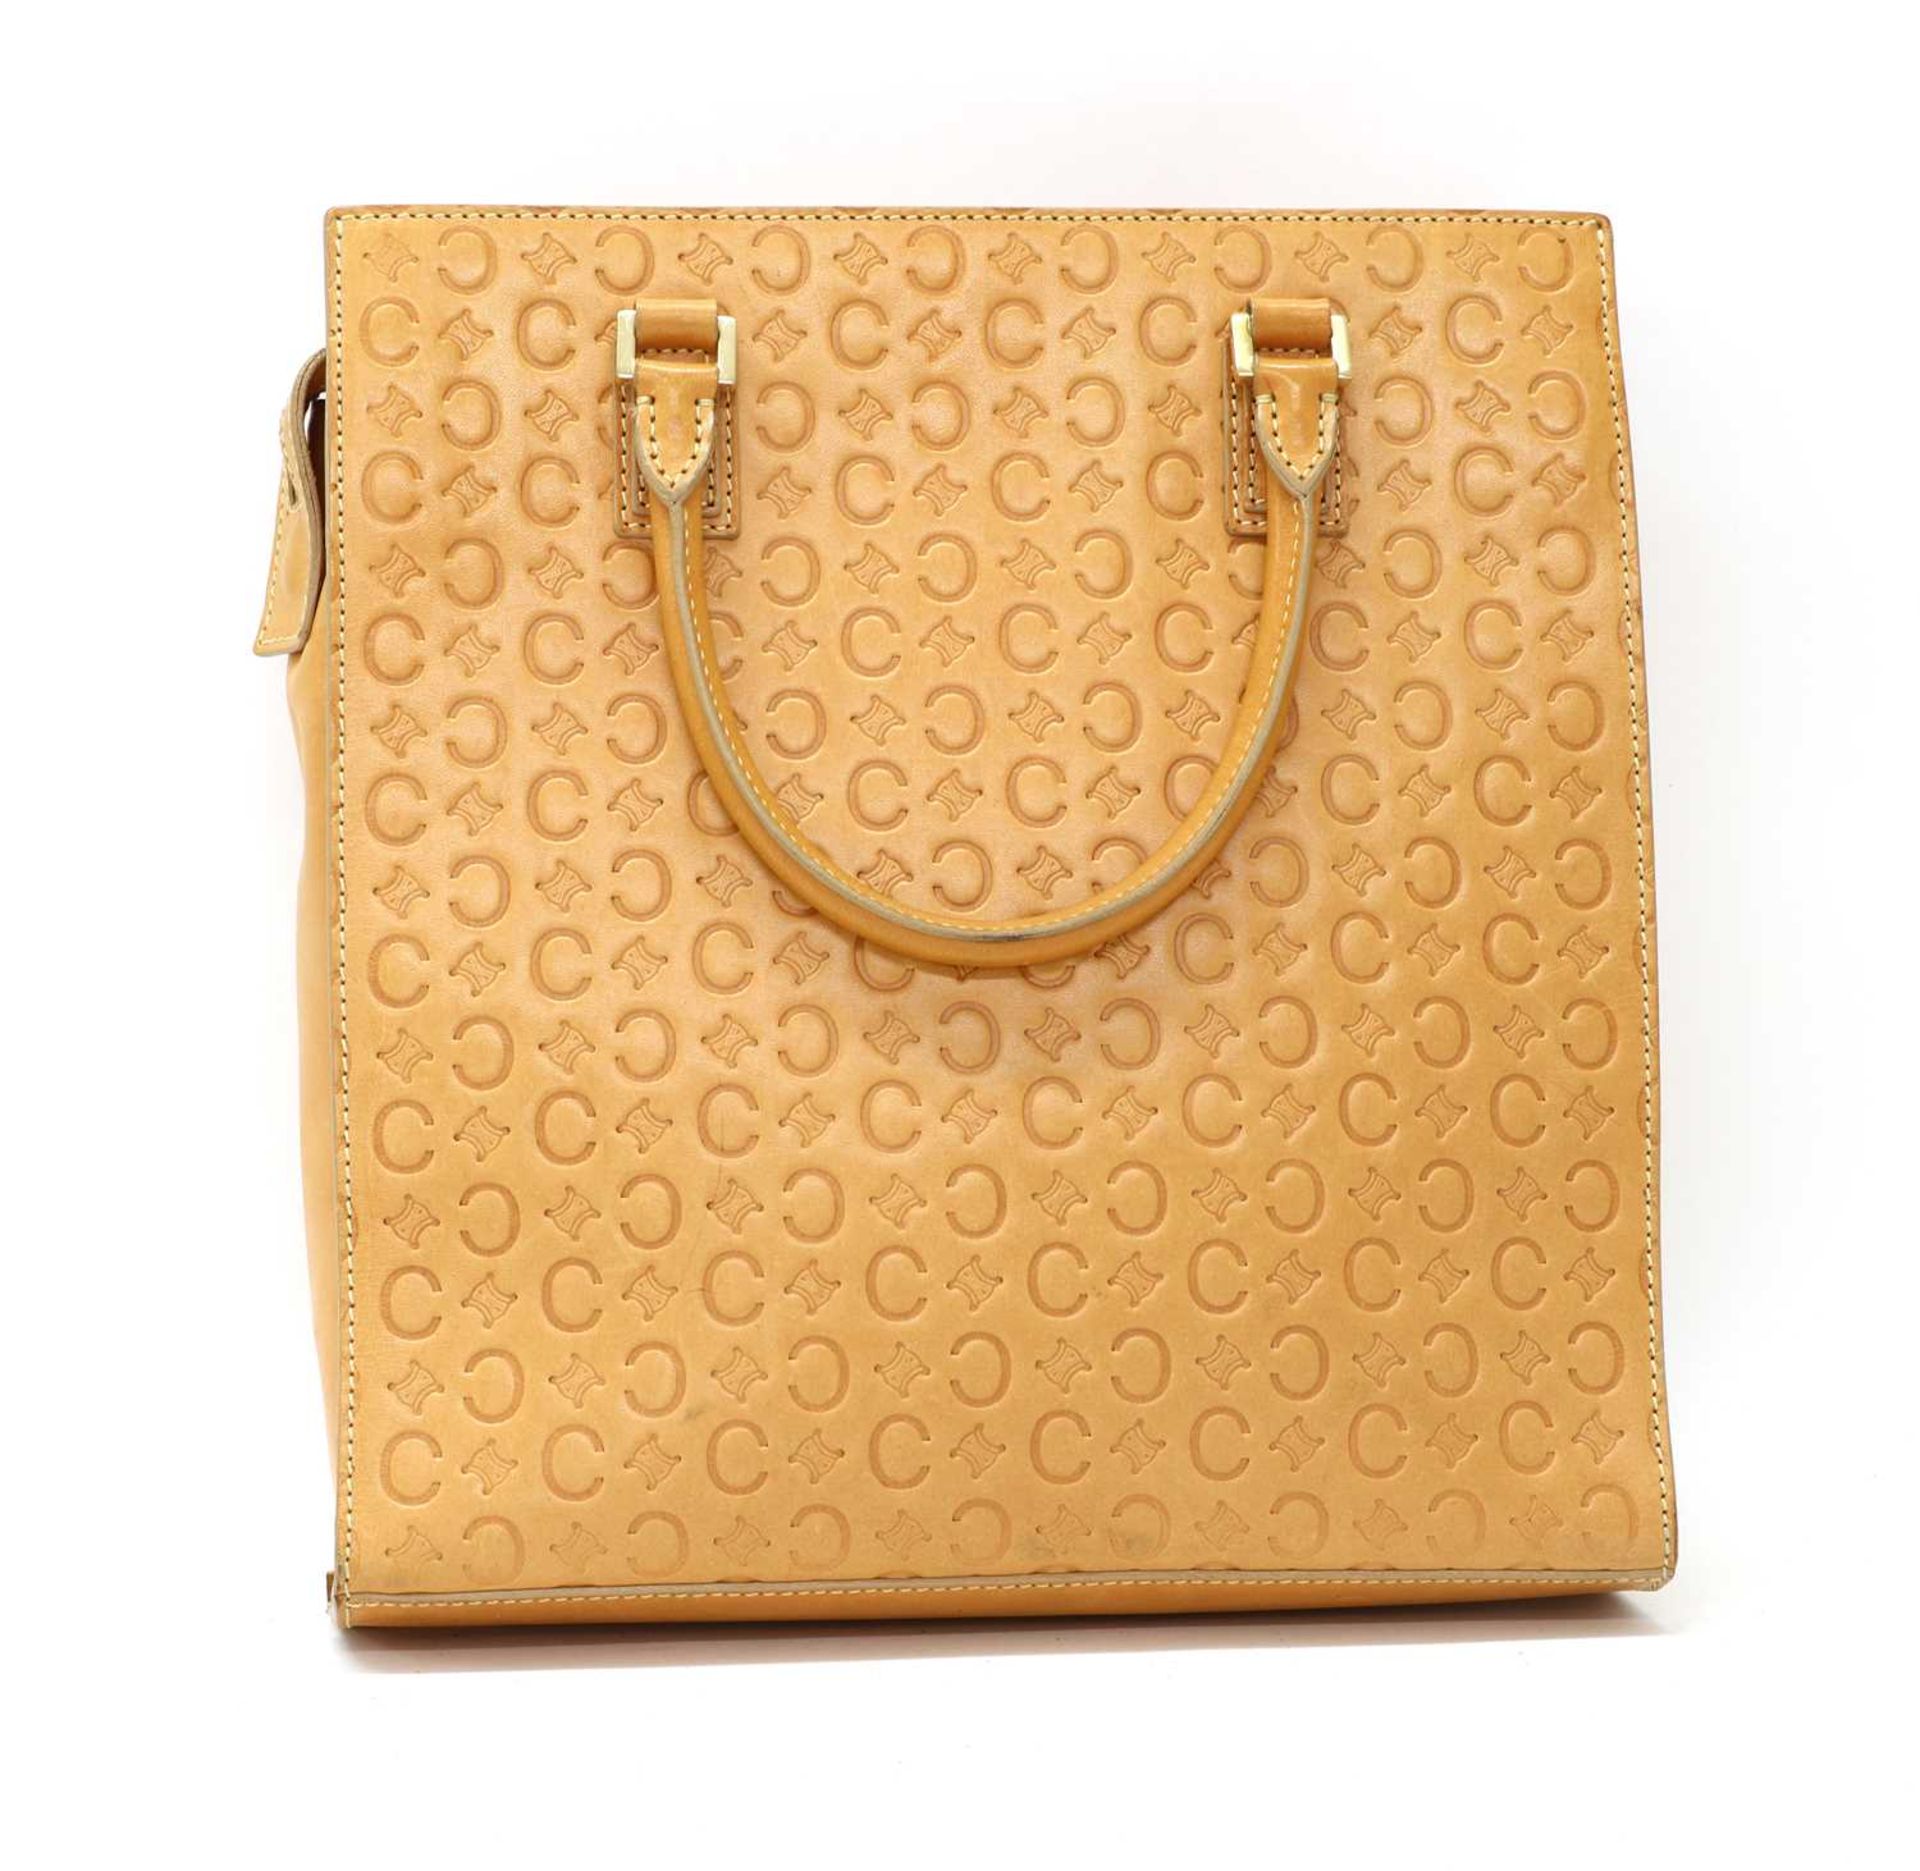 A Celine tan leather blason pattern handbag, - Image 2 of 3